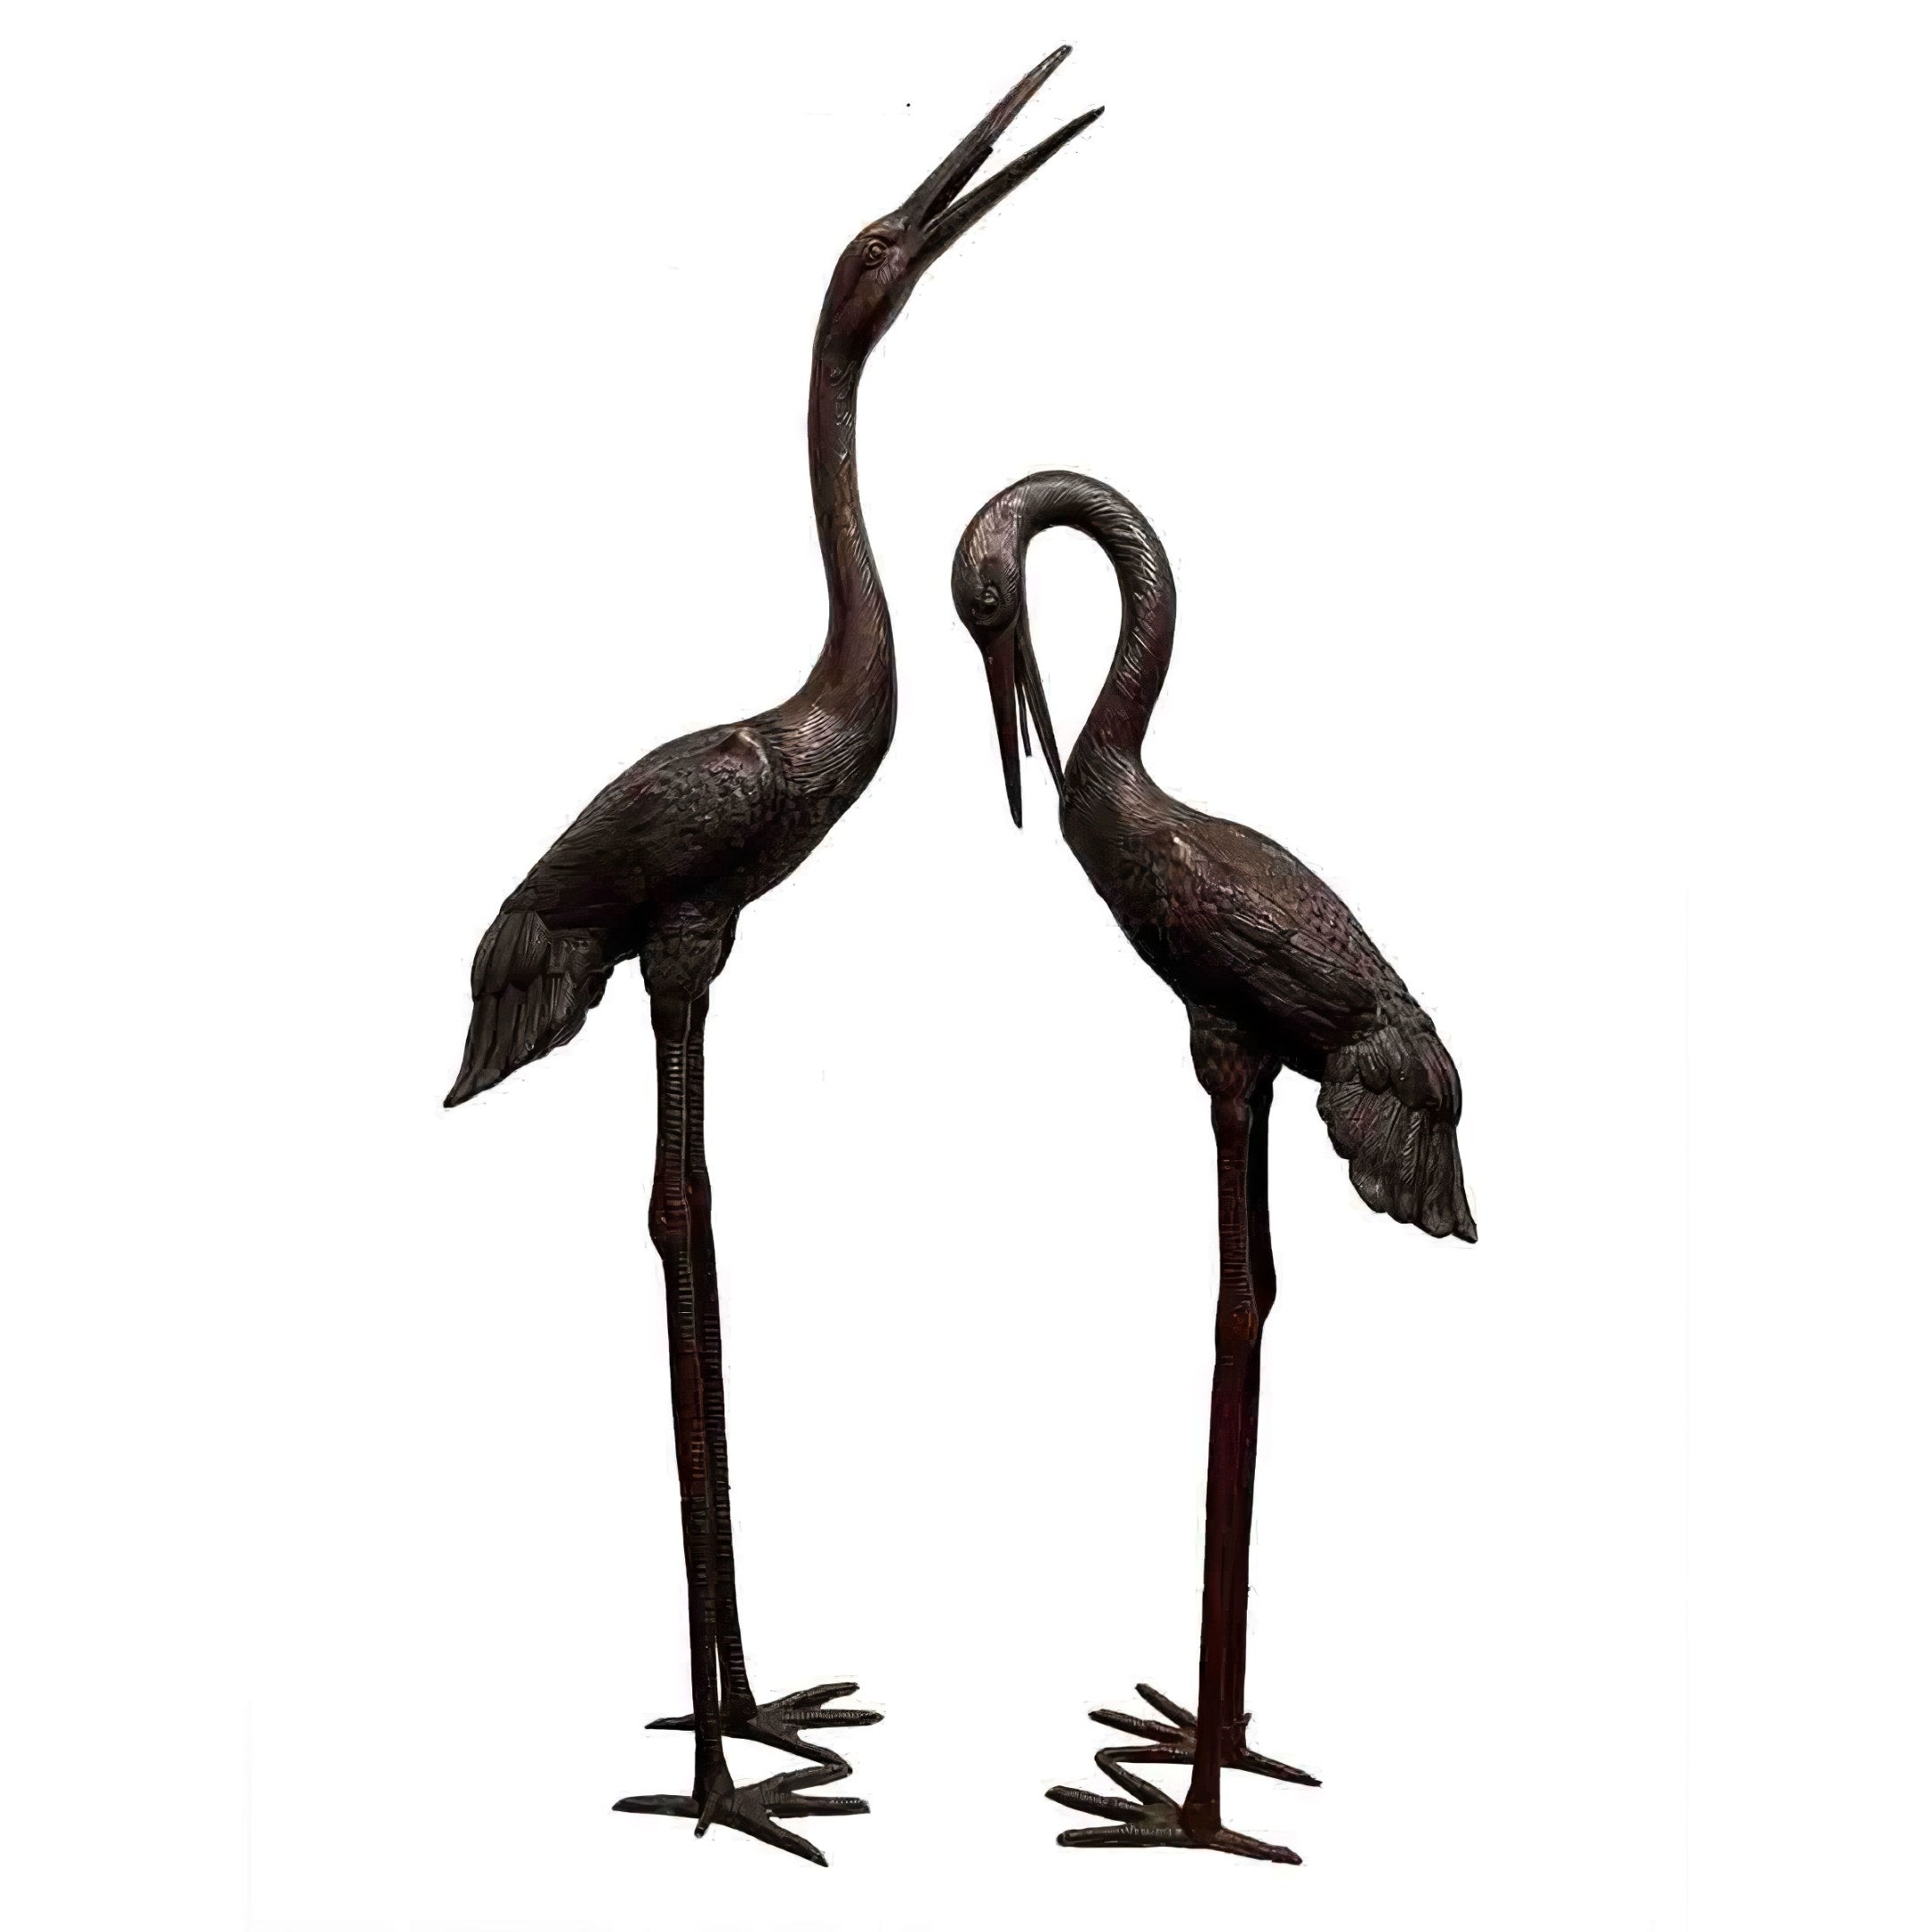 Pair of Cranes Bronze Statues